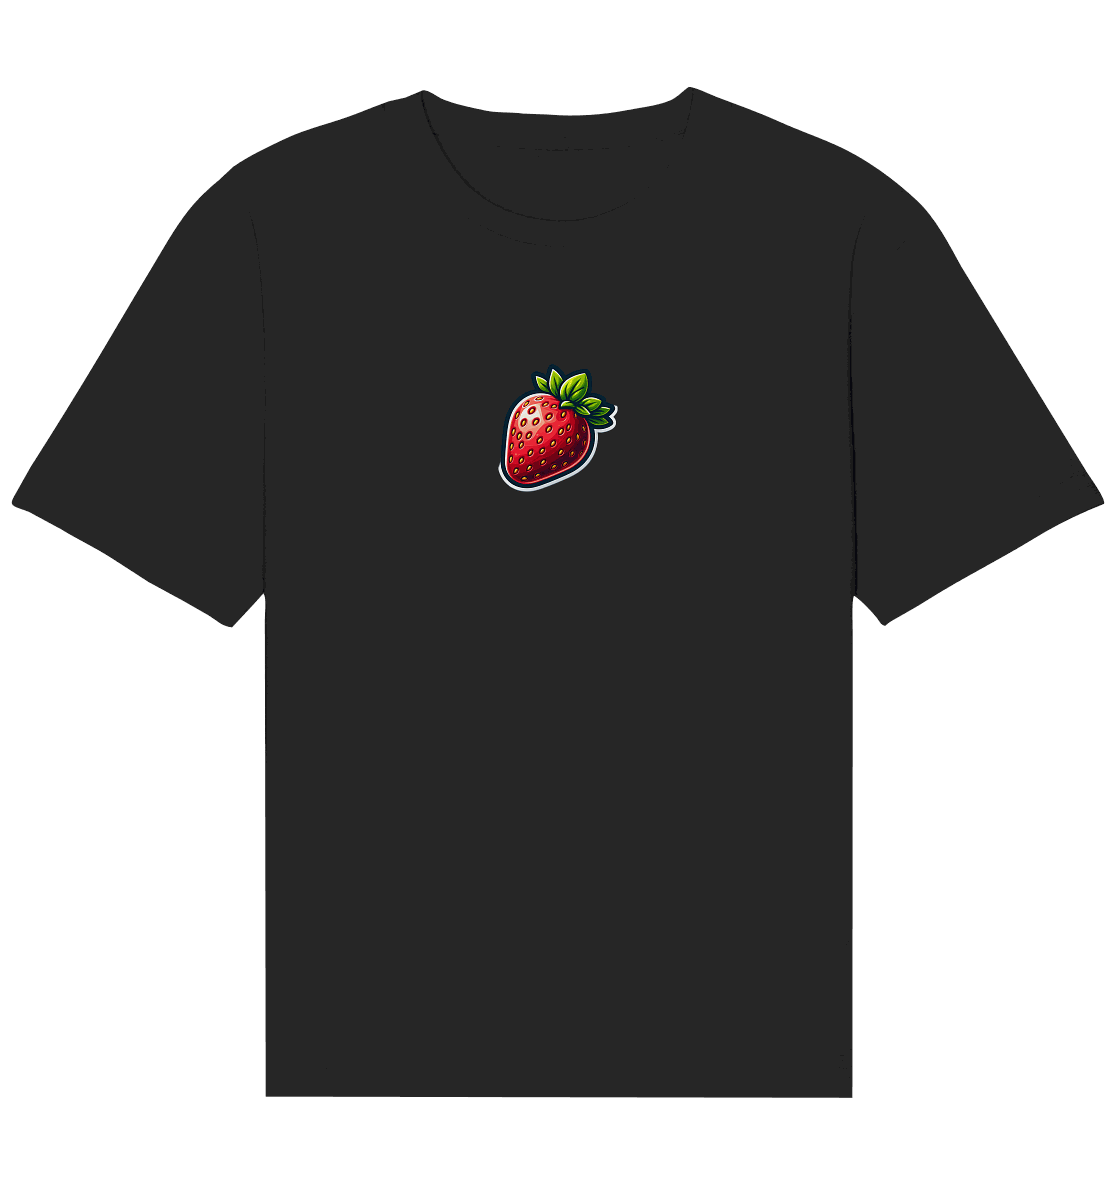 P4Y Fruit Shirt - Strawberry